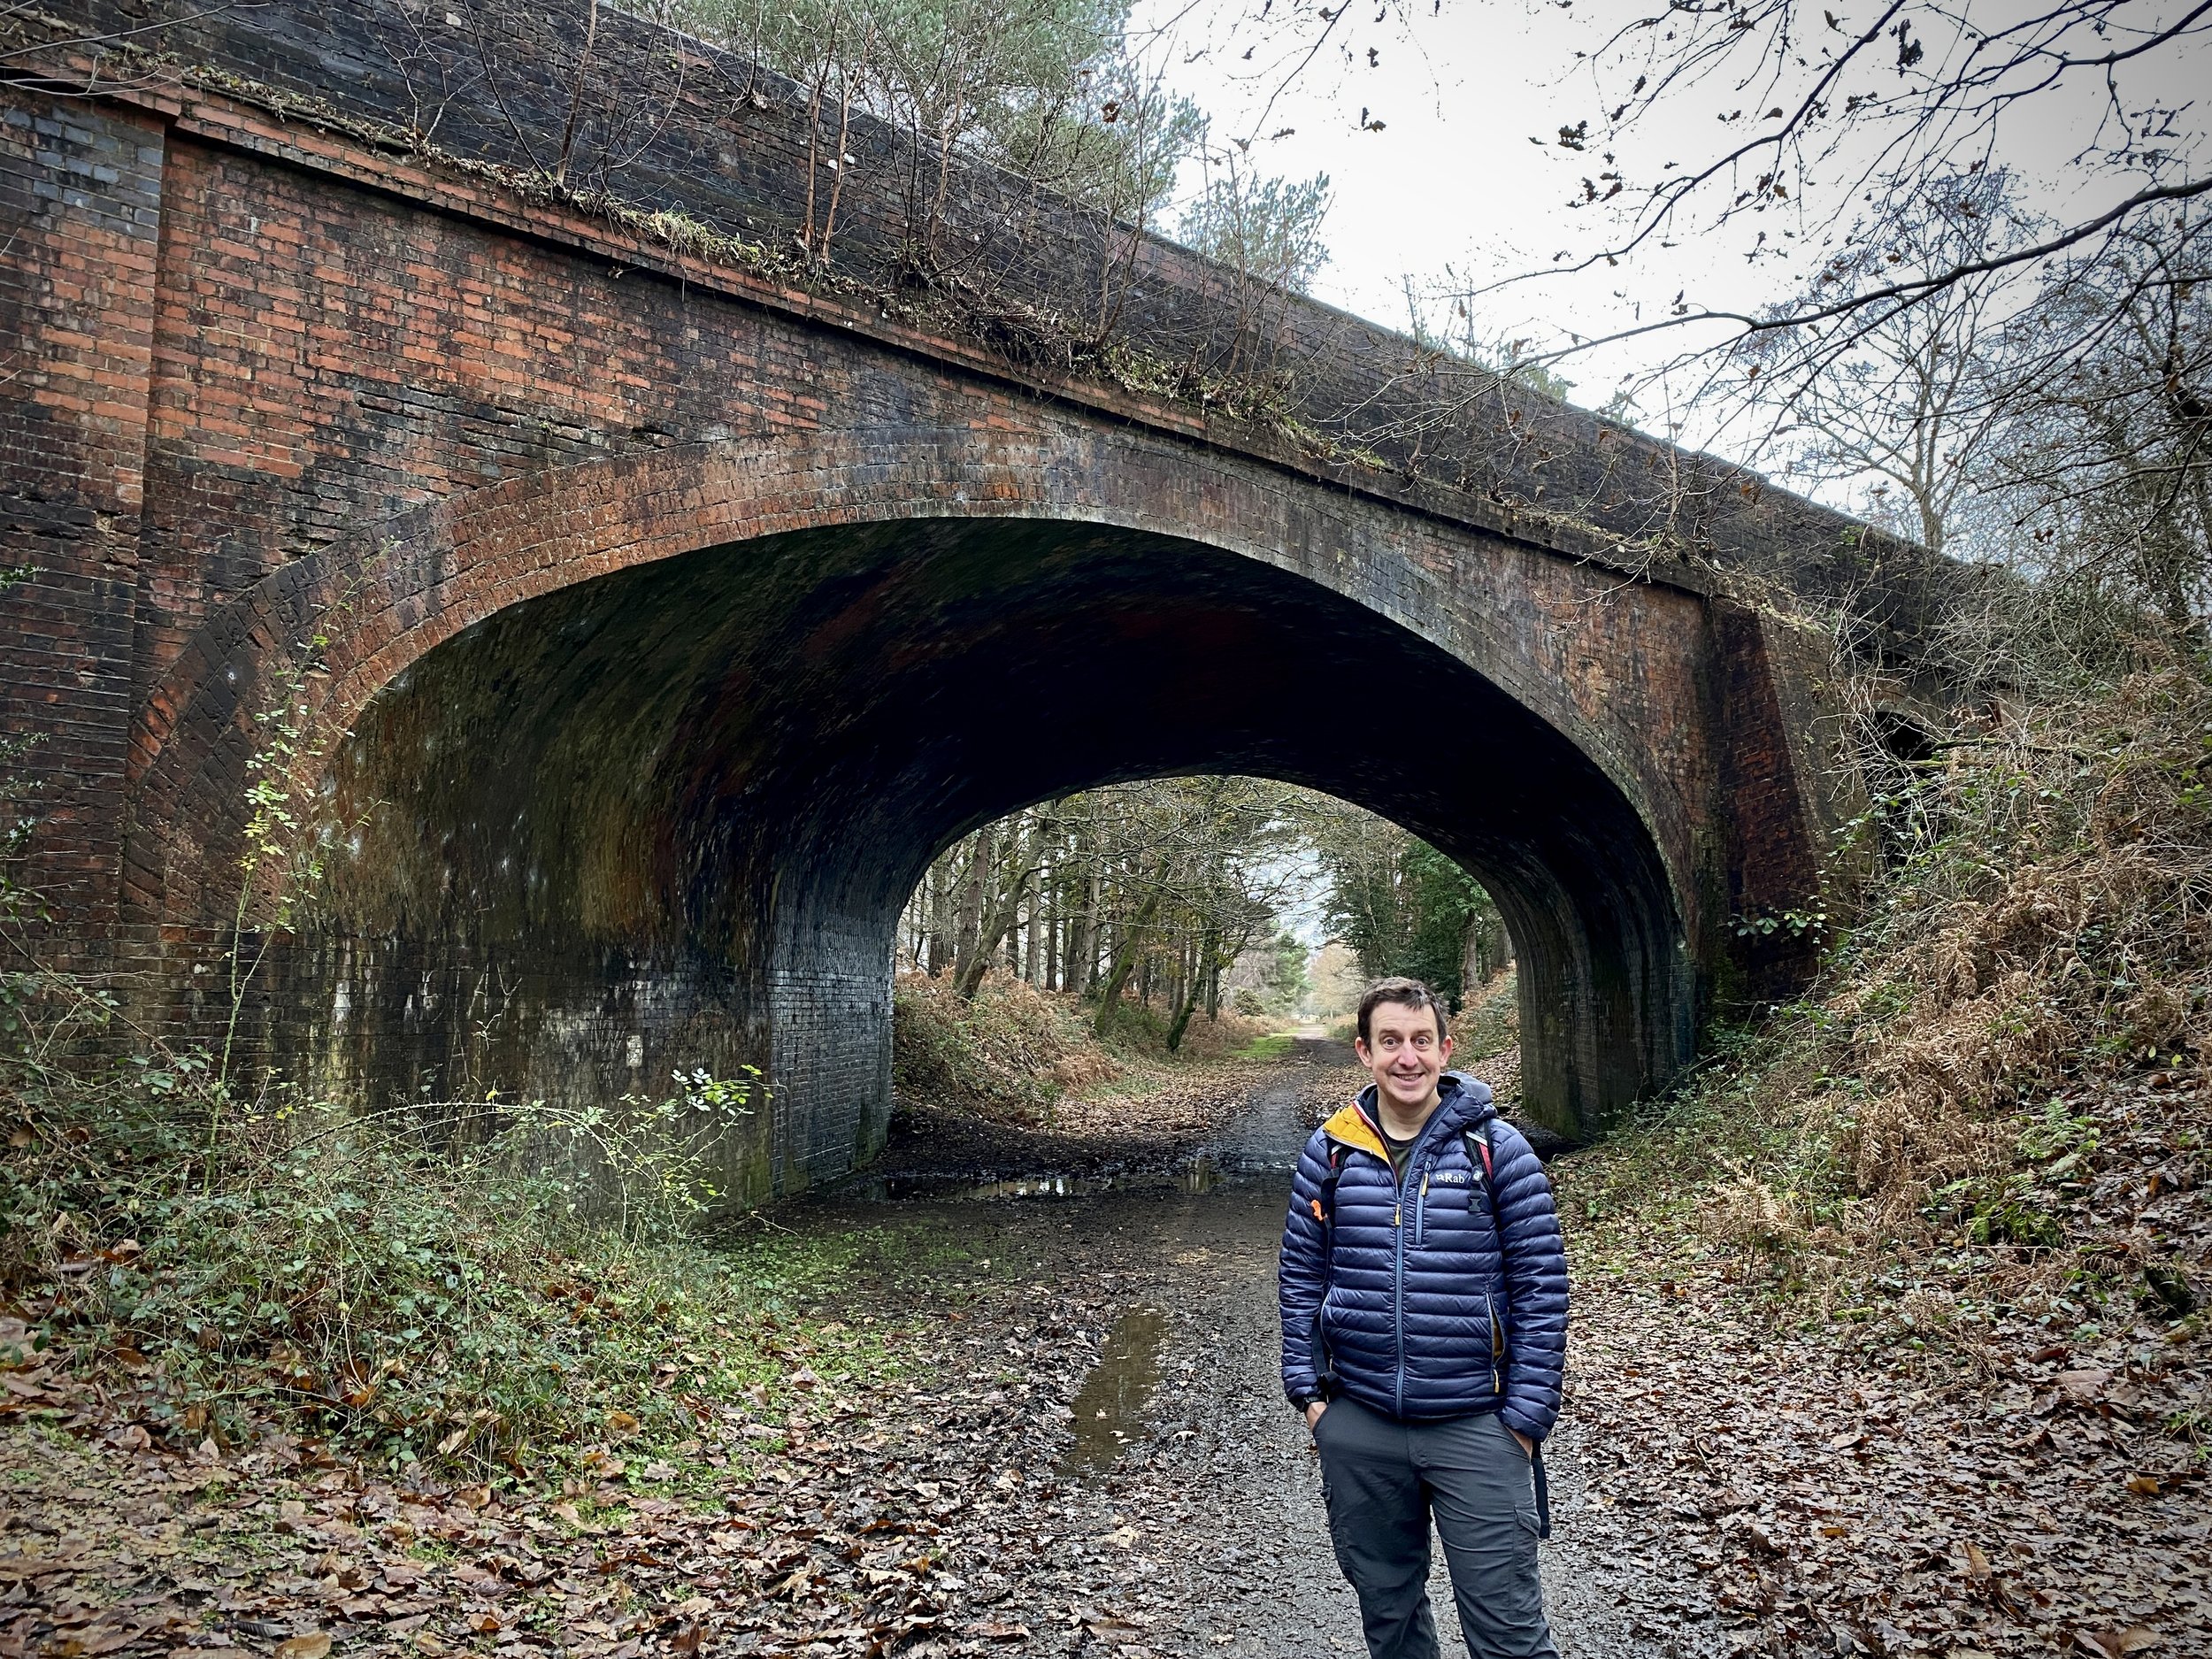 Brockenhurst, Sway and the Disused Railway